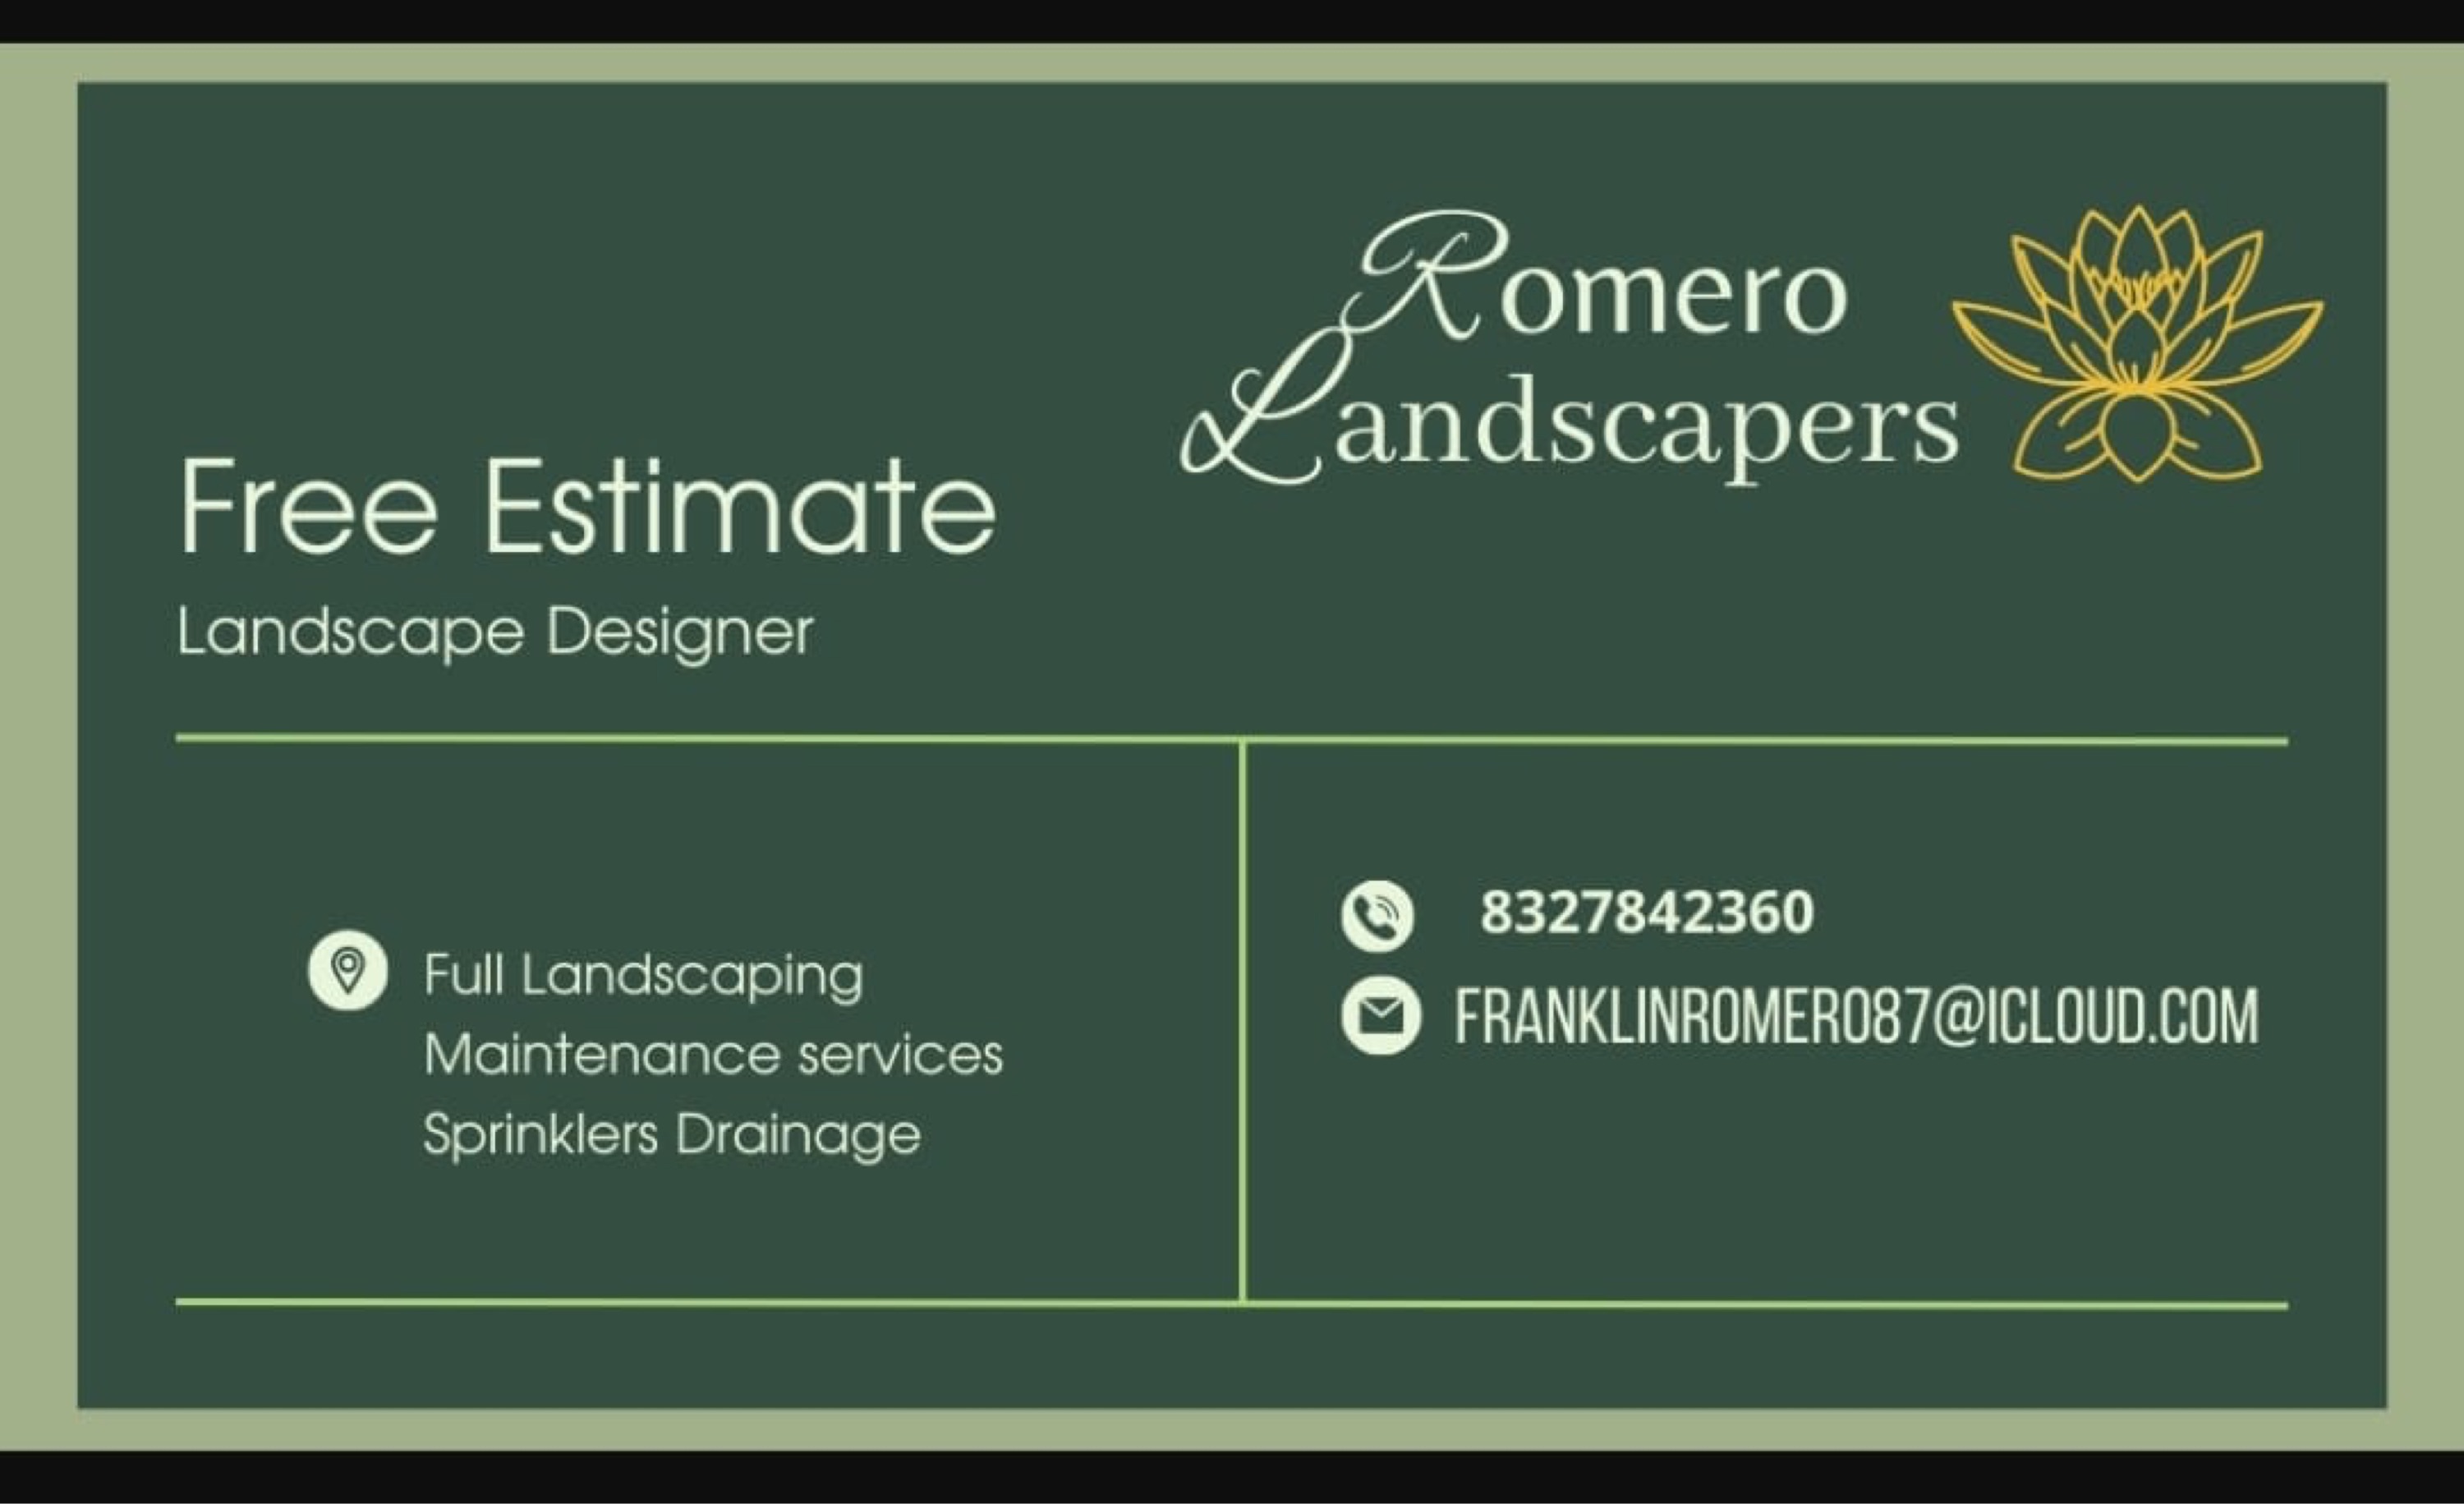 Romero Landscapers Logo